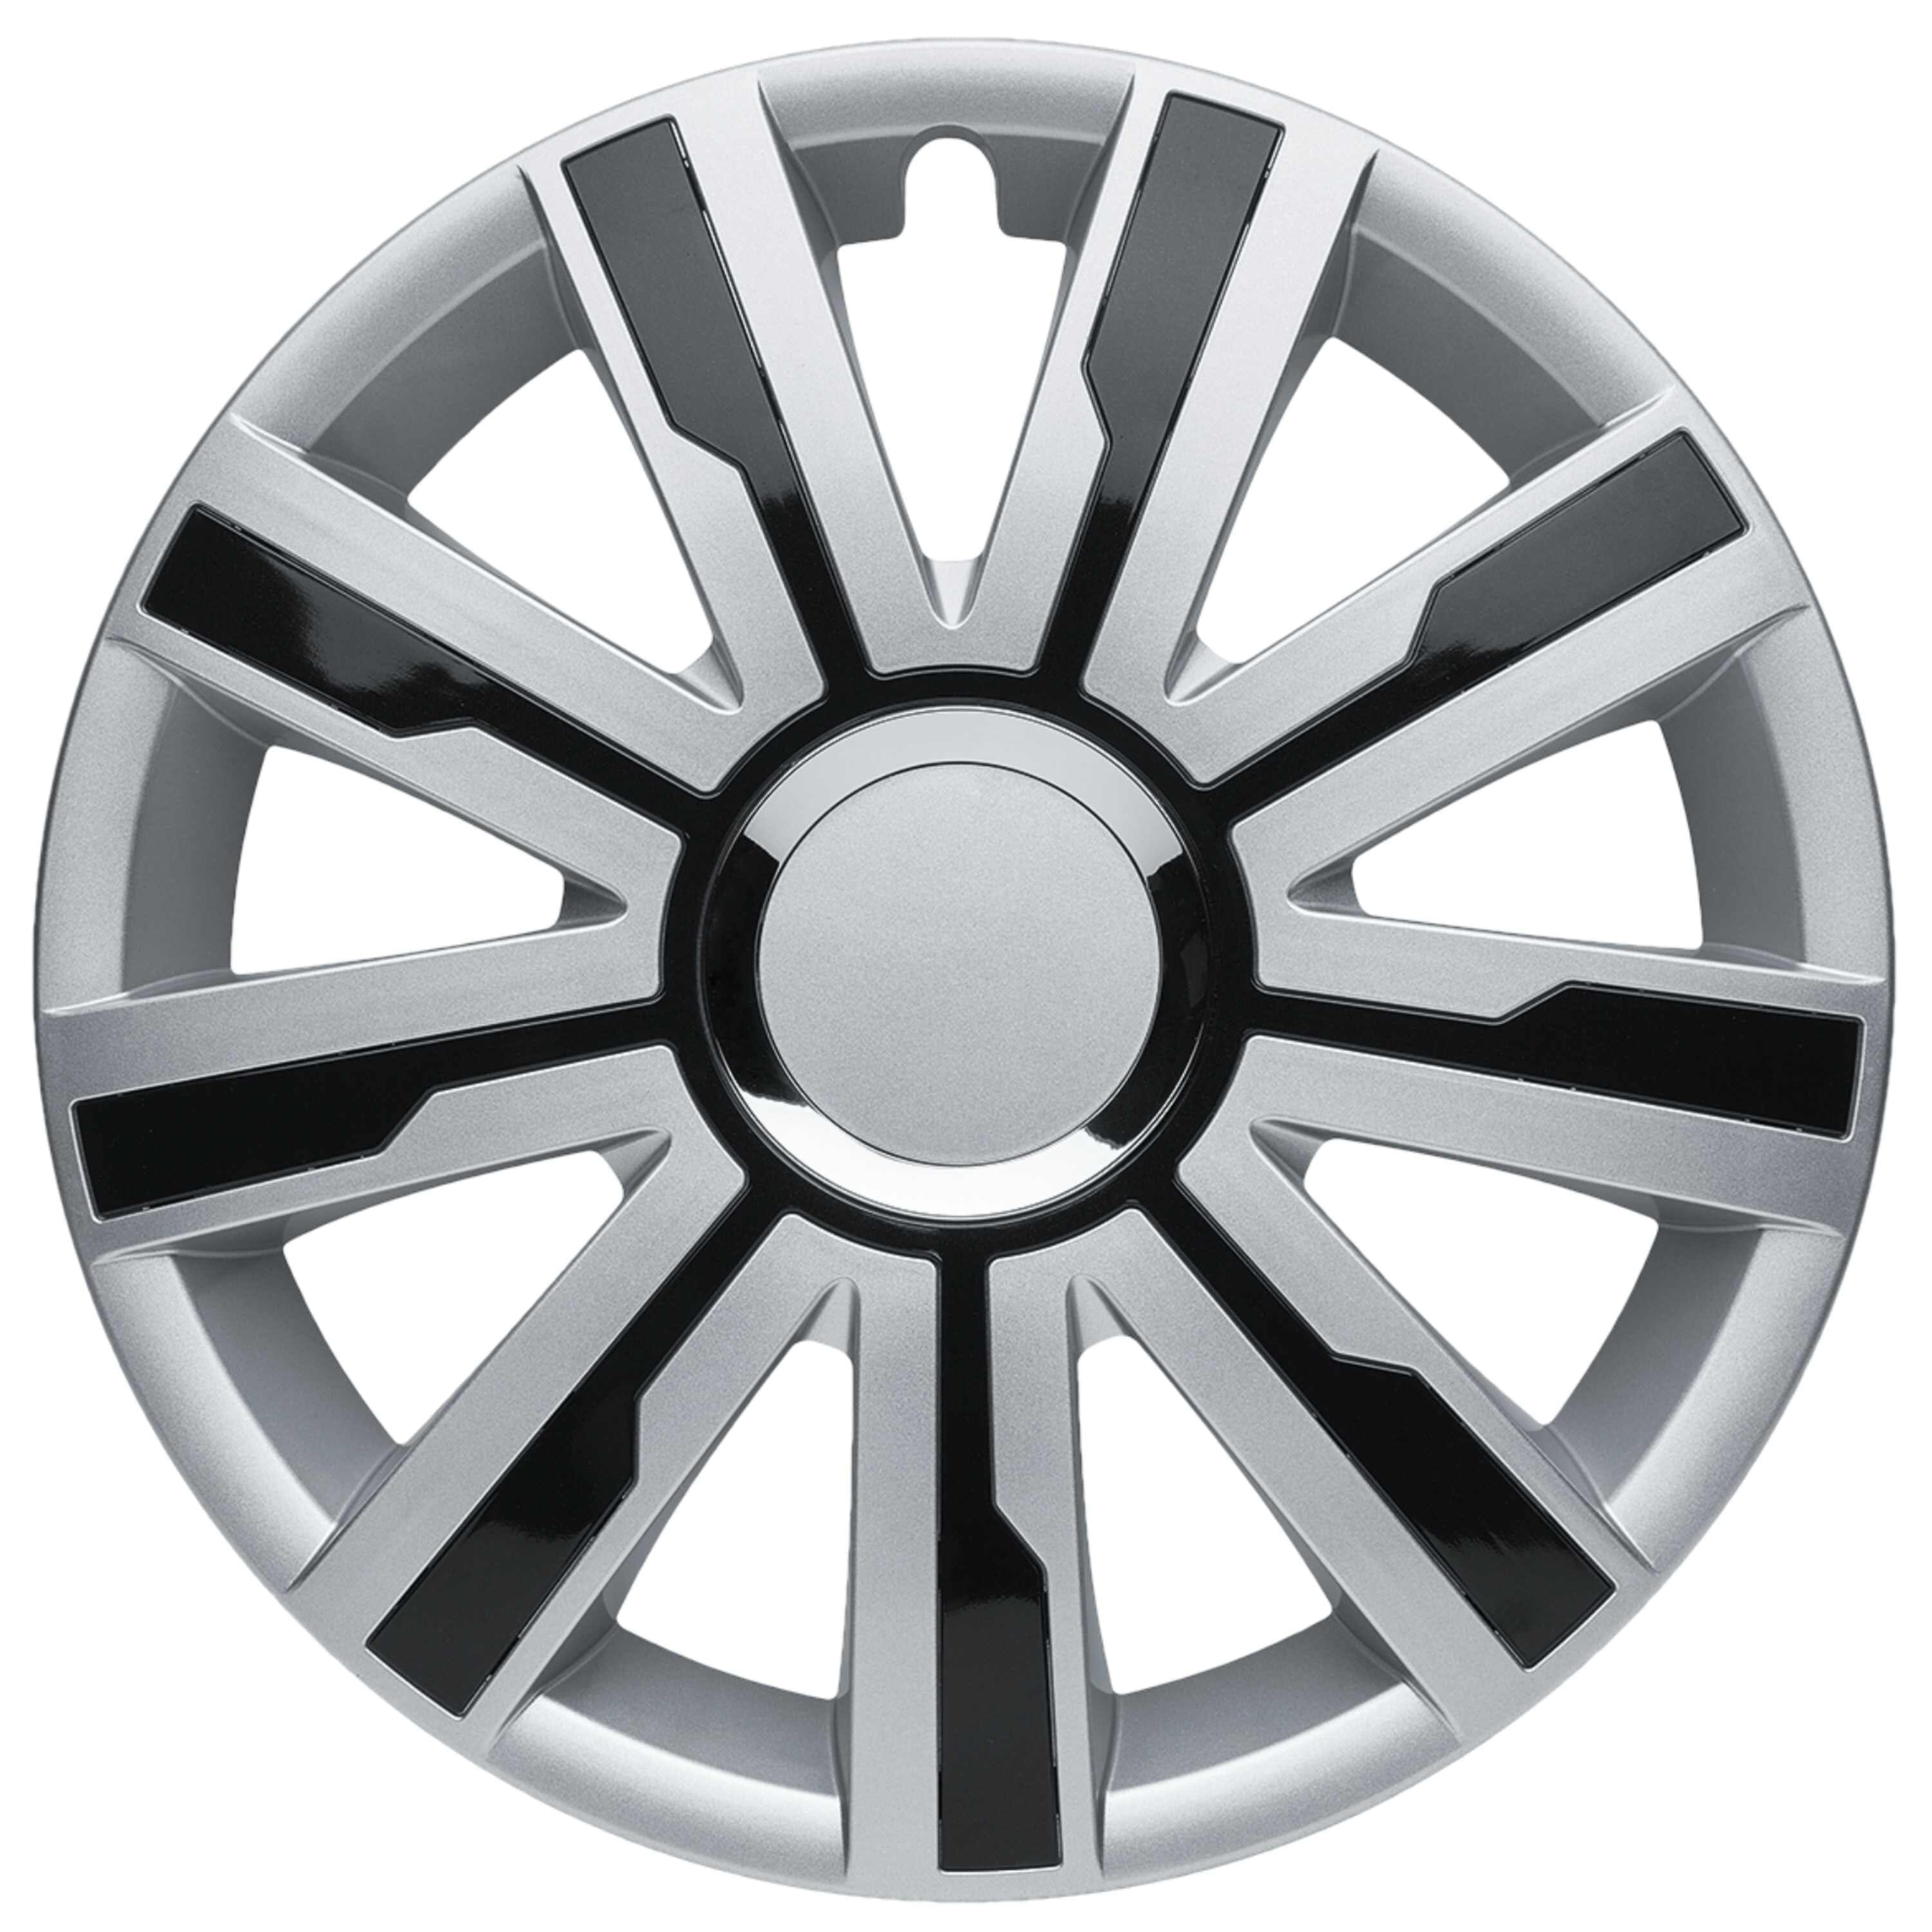 Kuglo Hubcaps Mirage Silver or Grey-Black (4 pieces)